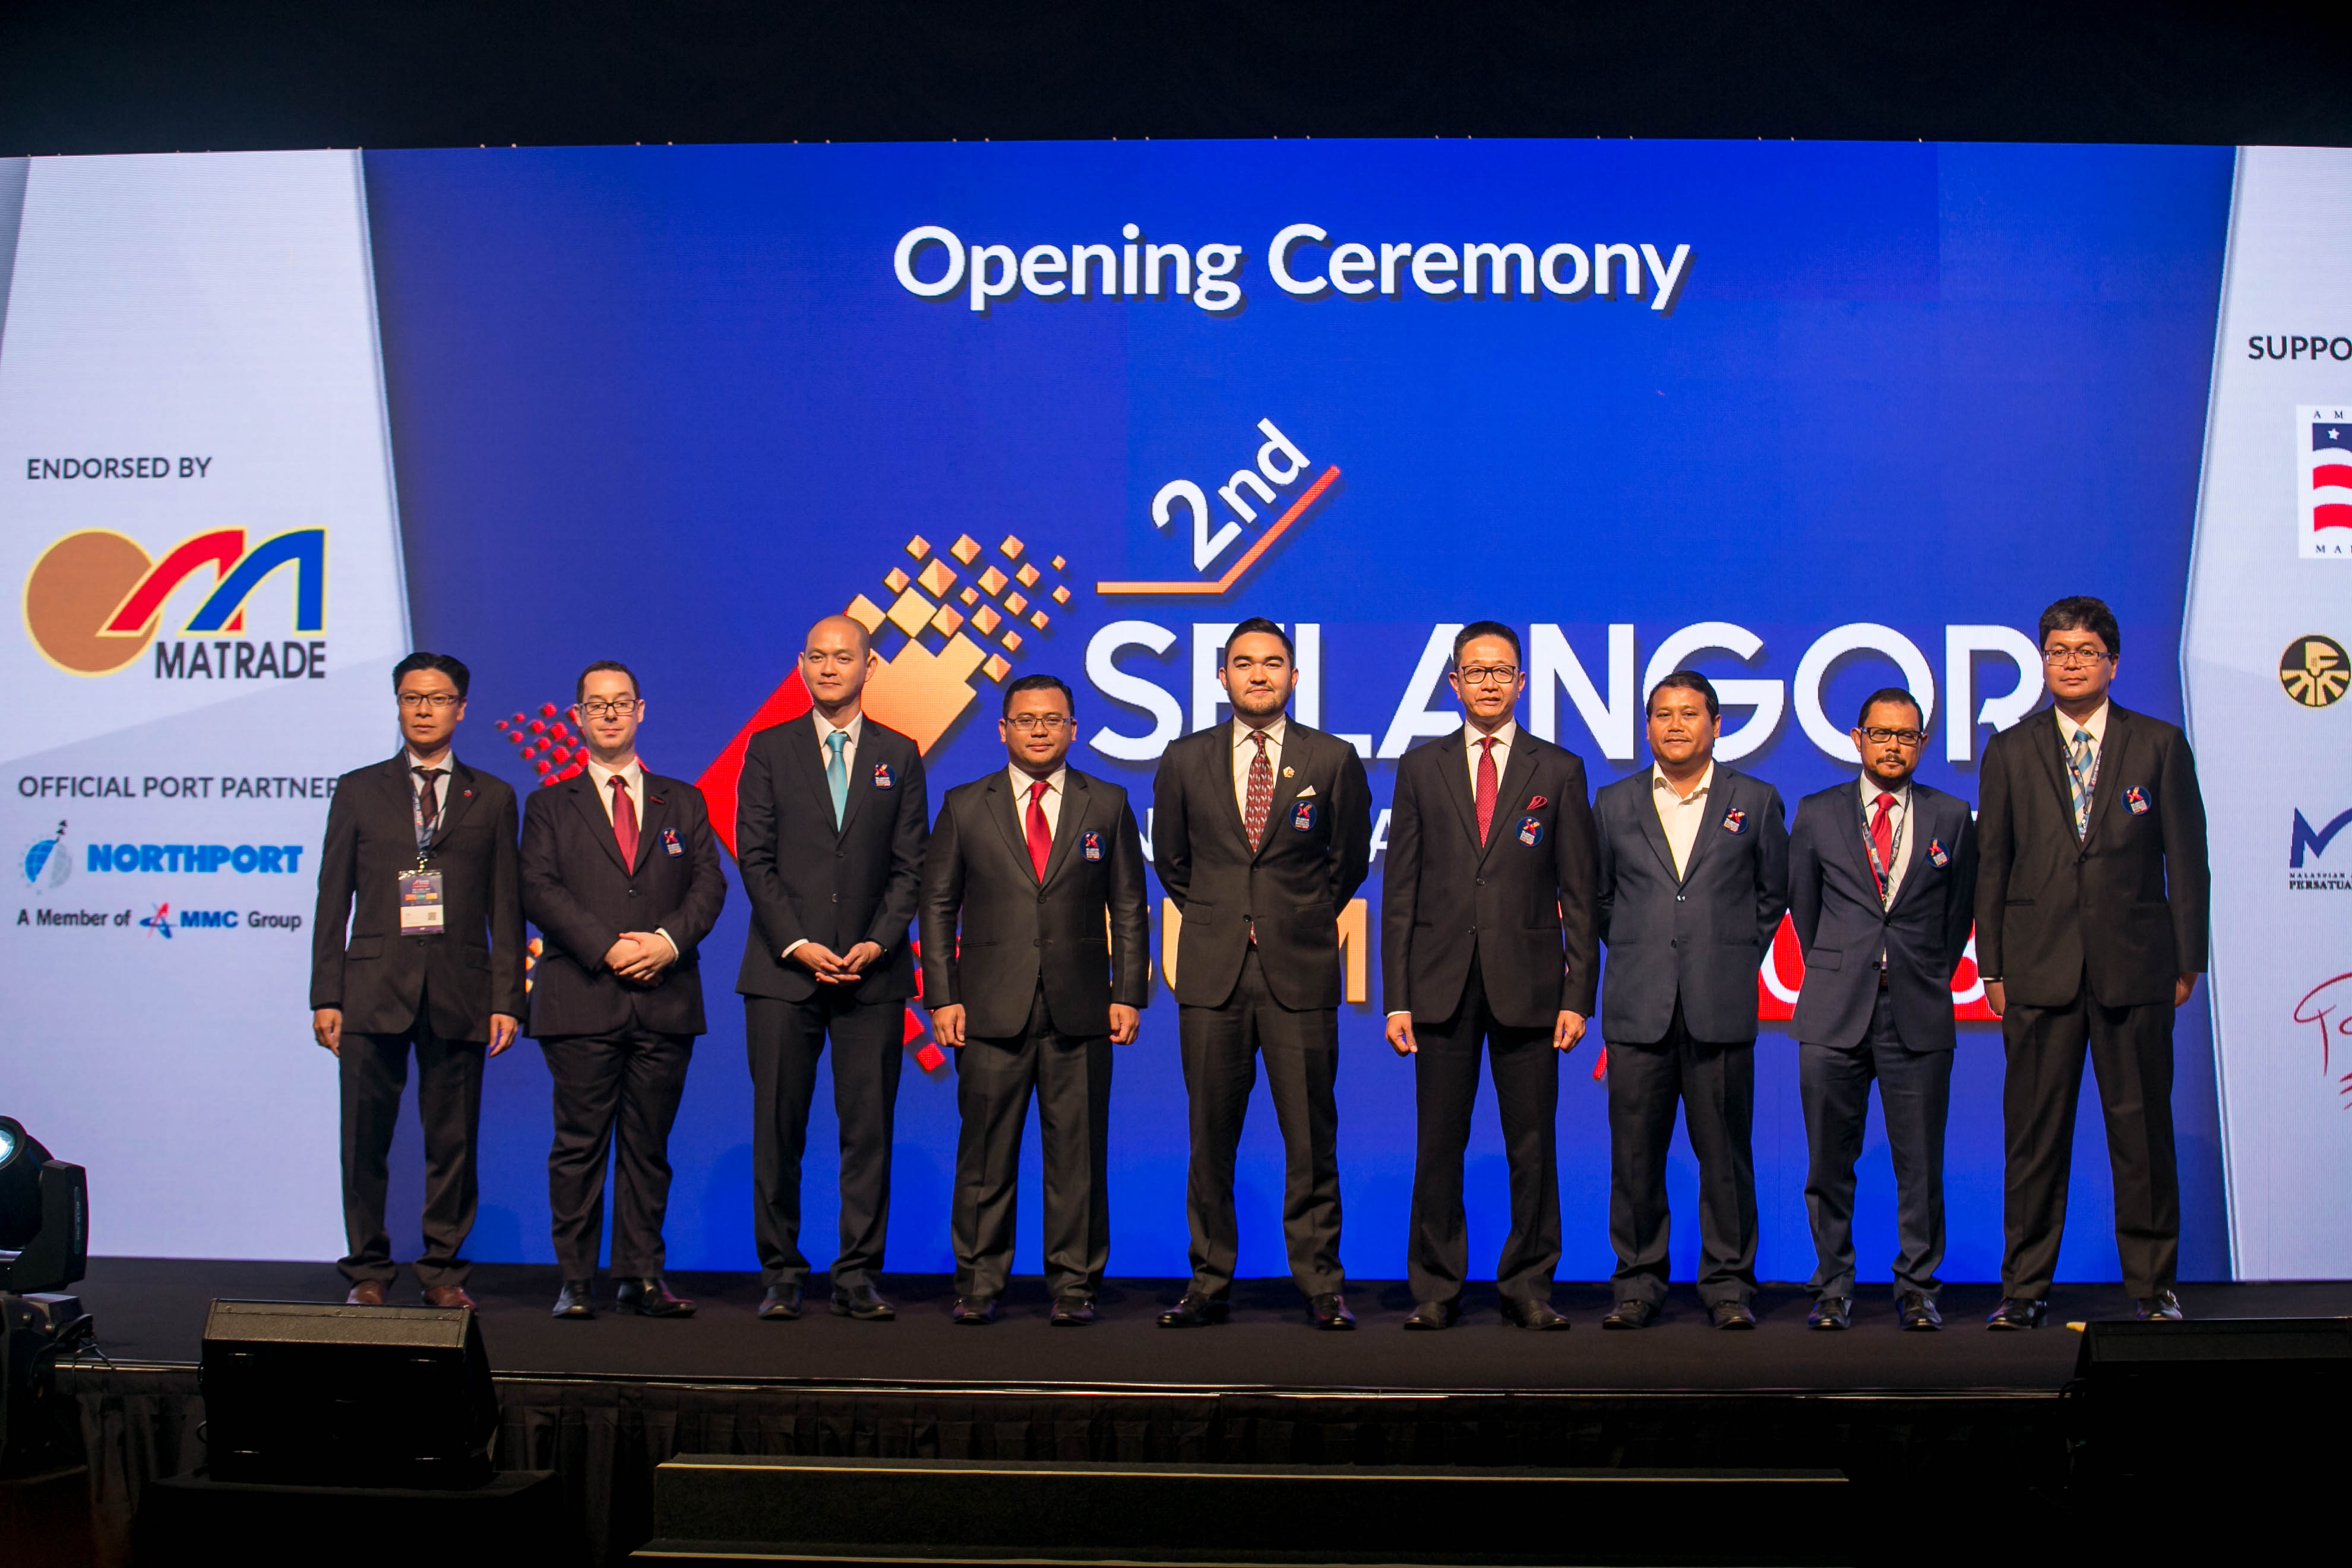 Selangor International Business Summit 2019: Your gateway to ASEAN